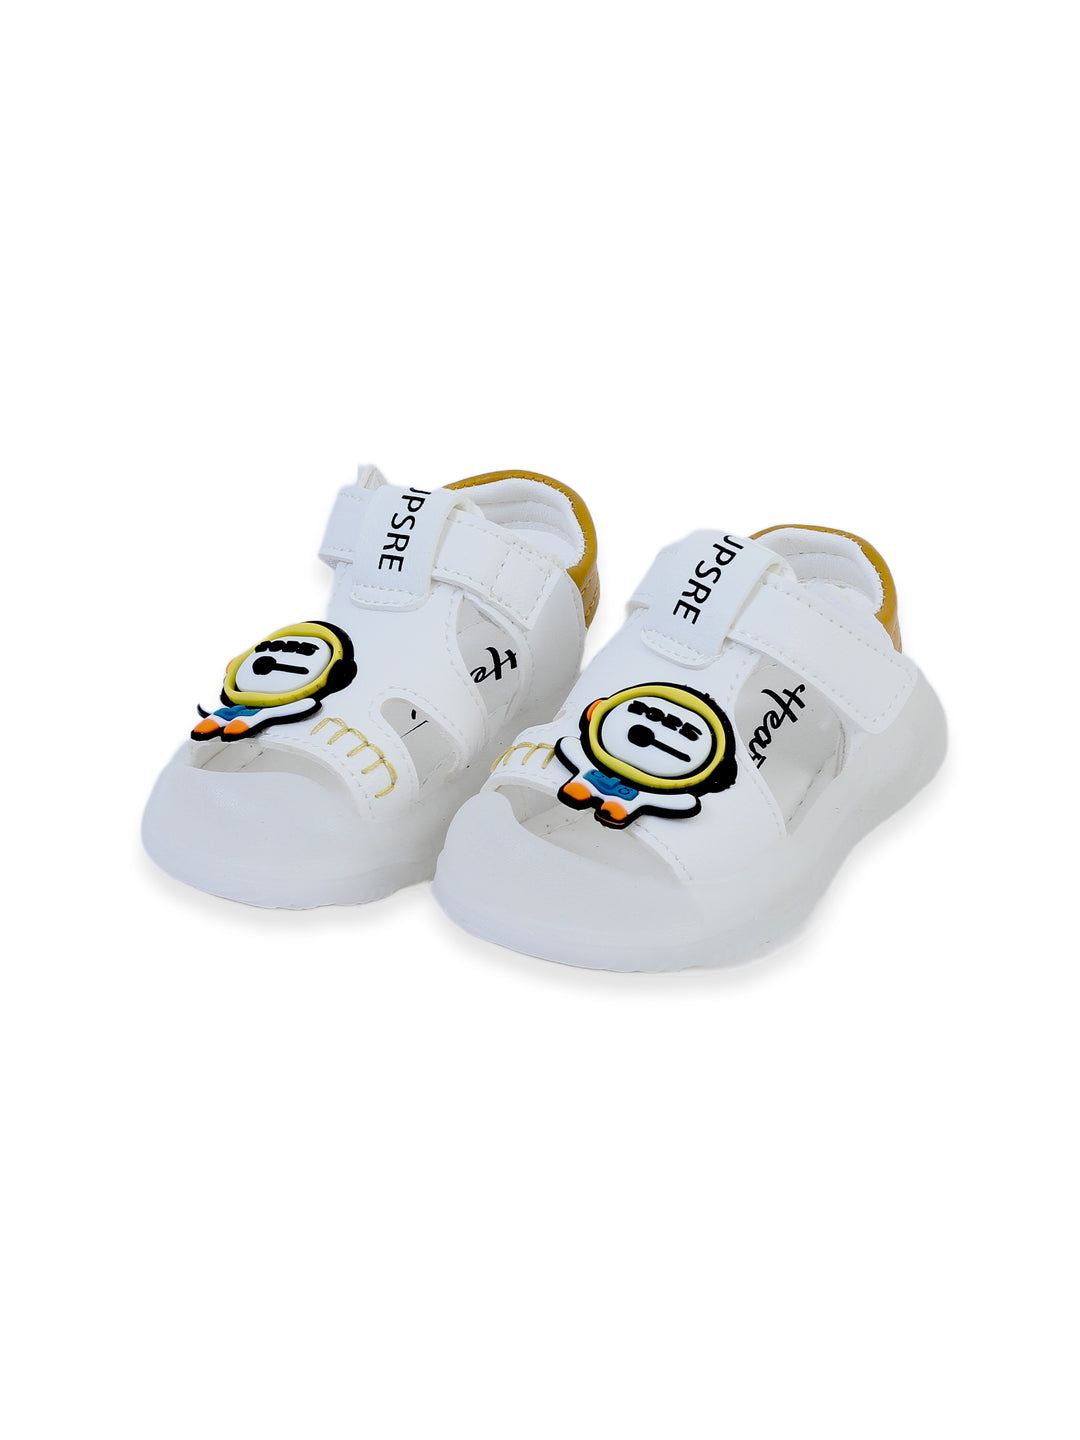 Imp Baby Sandal #809 (S-23)